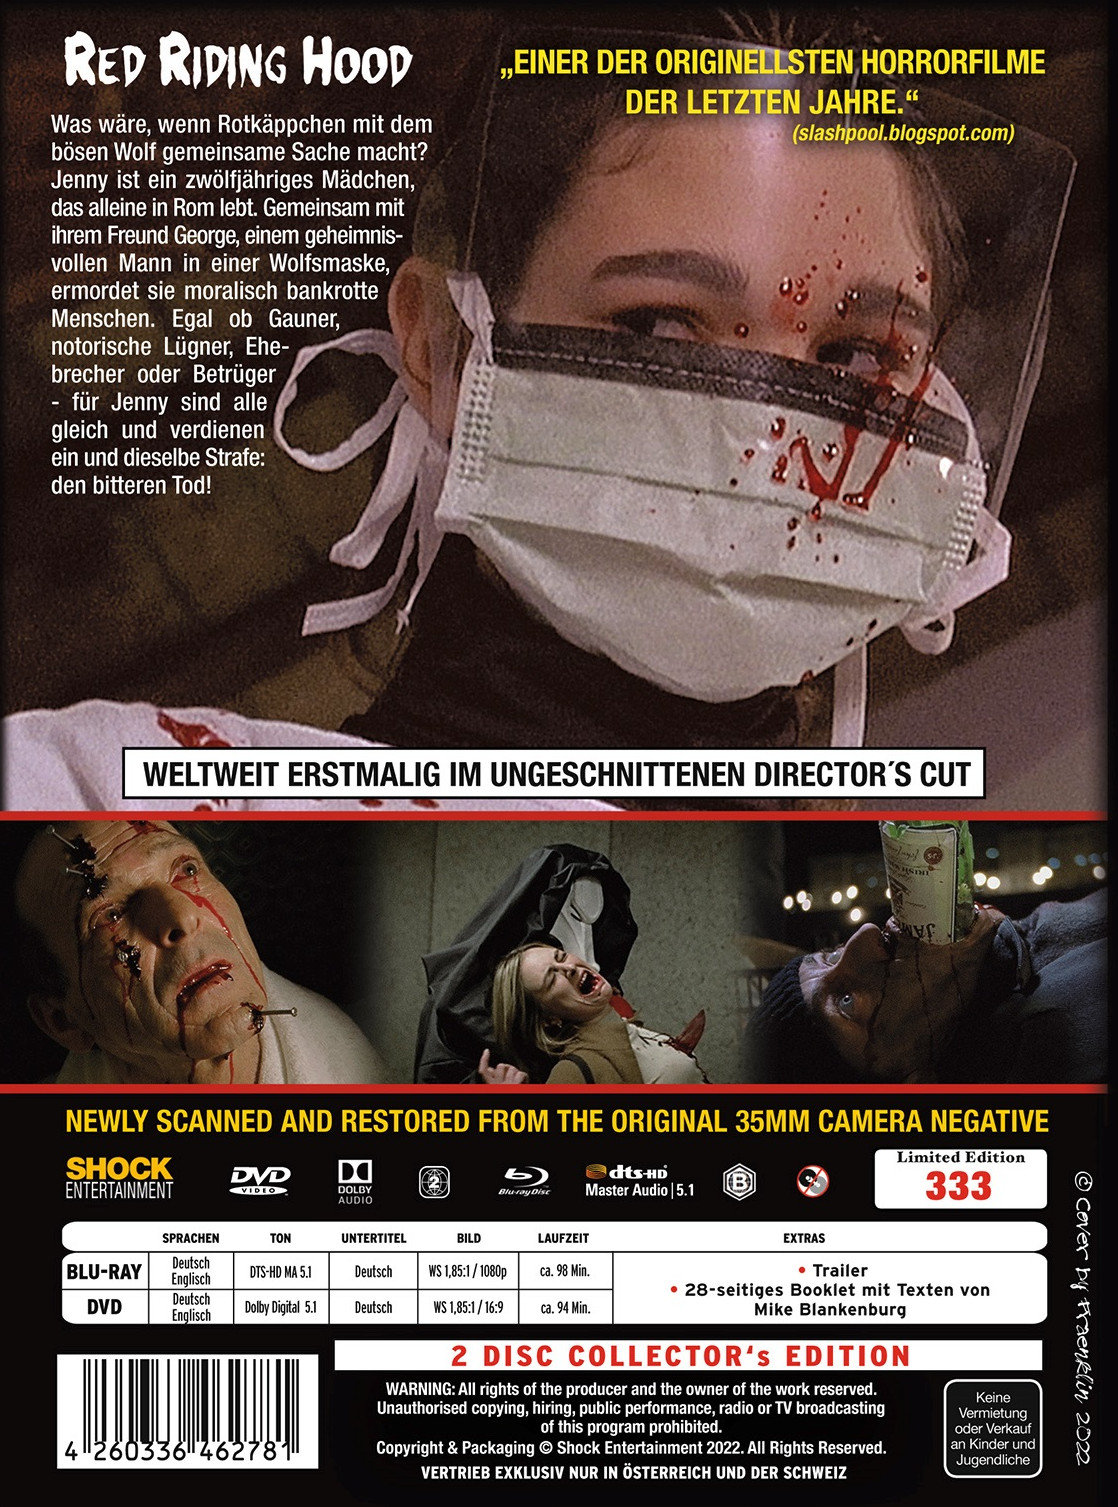 Red Riding Hood (2003) - Directors Cut - Uncut Mediabook Edition (DVD+blu-ray) (B)